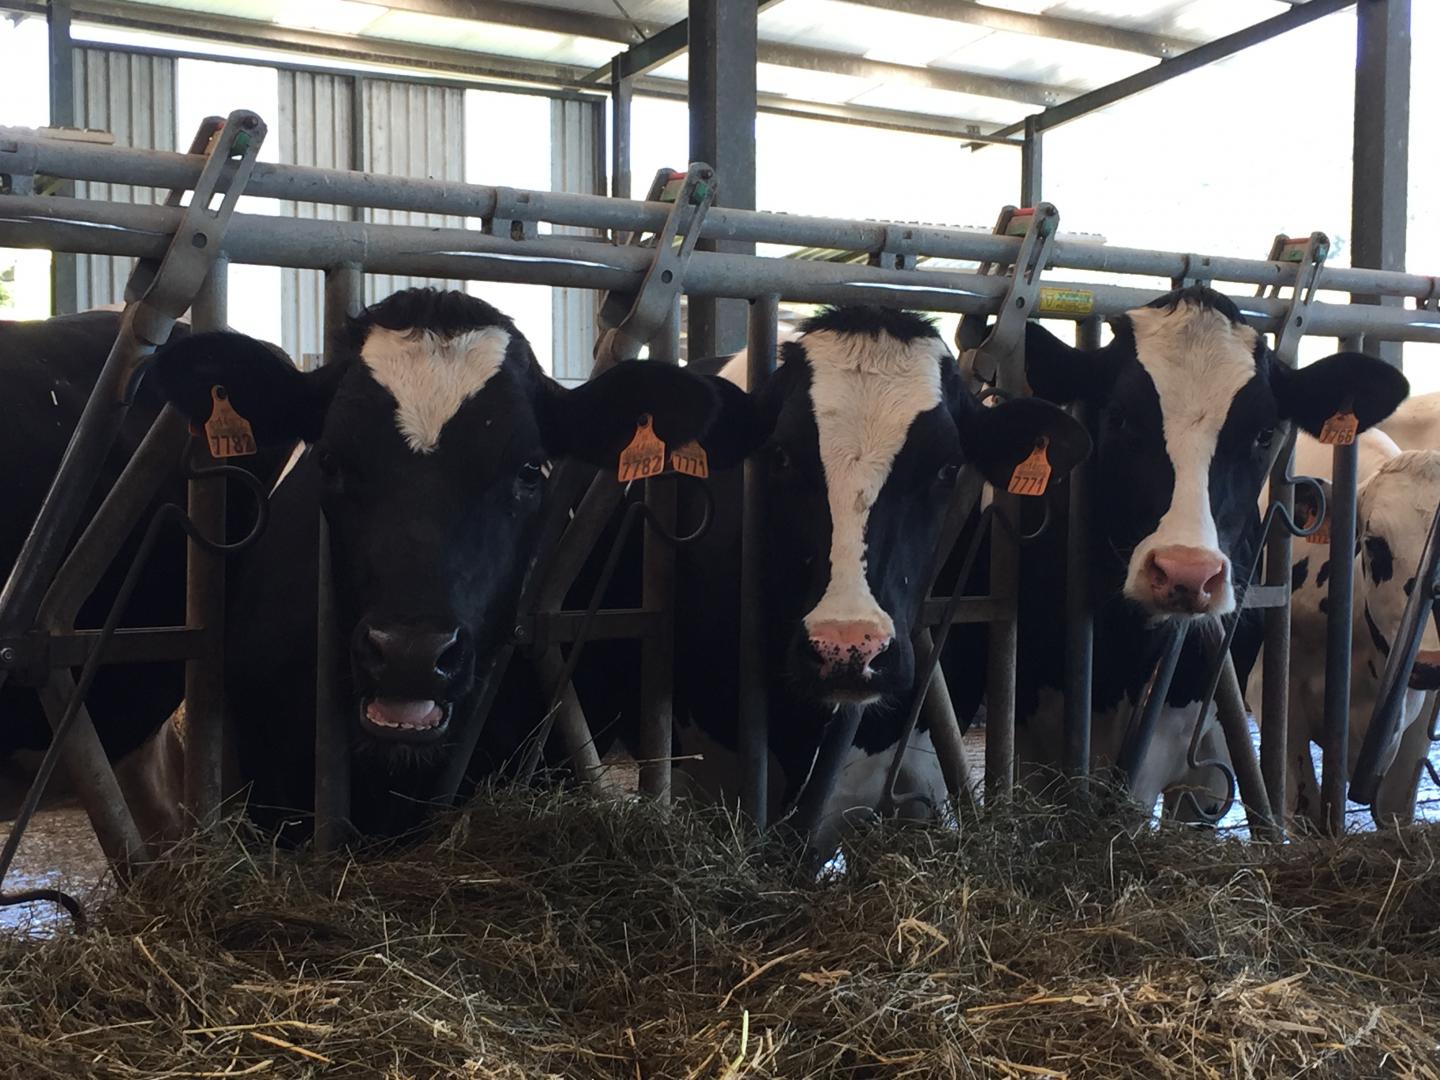 Cows on a Dairy Farm in Spain's Northern Region of Navarra